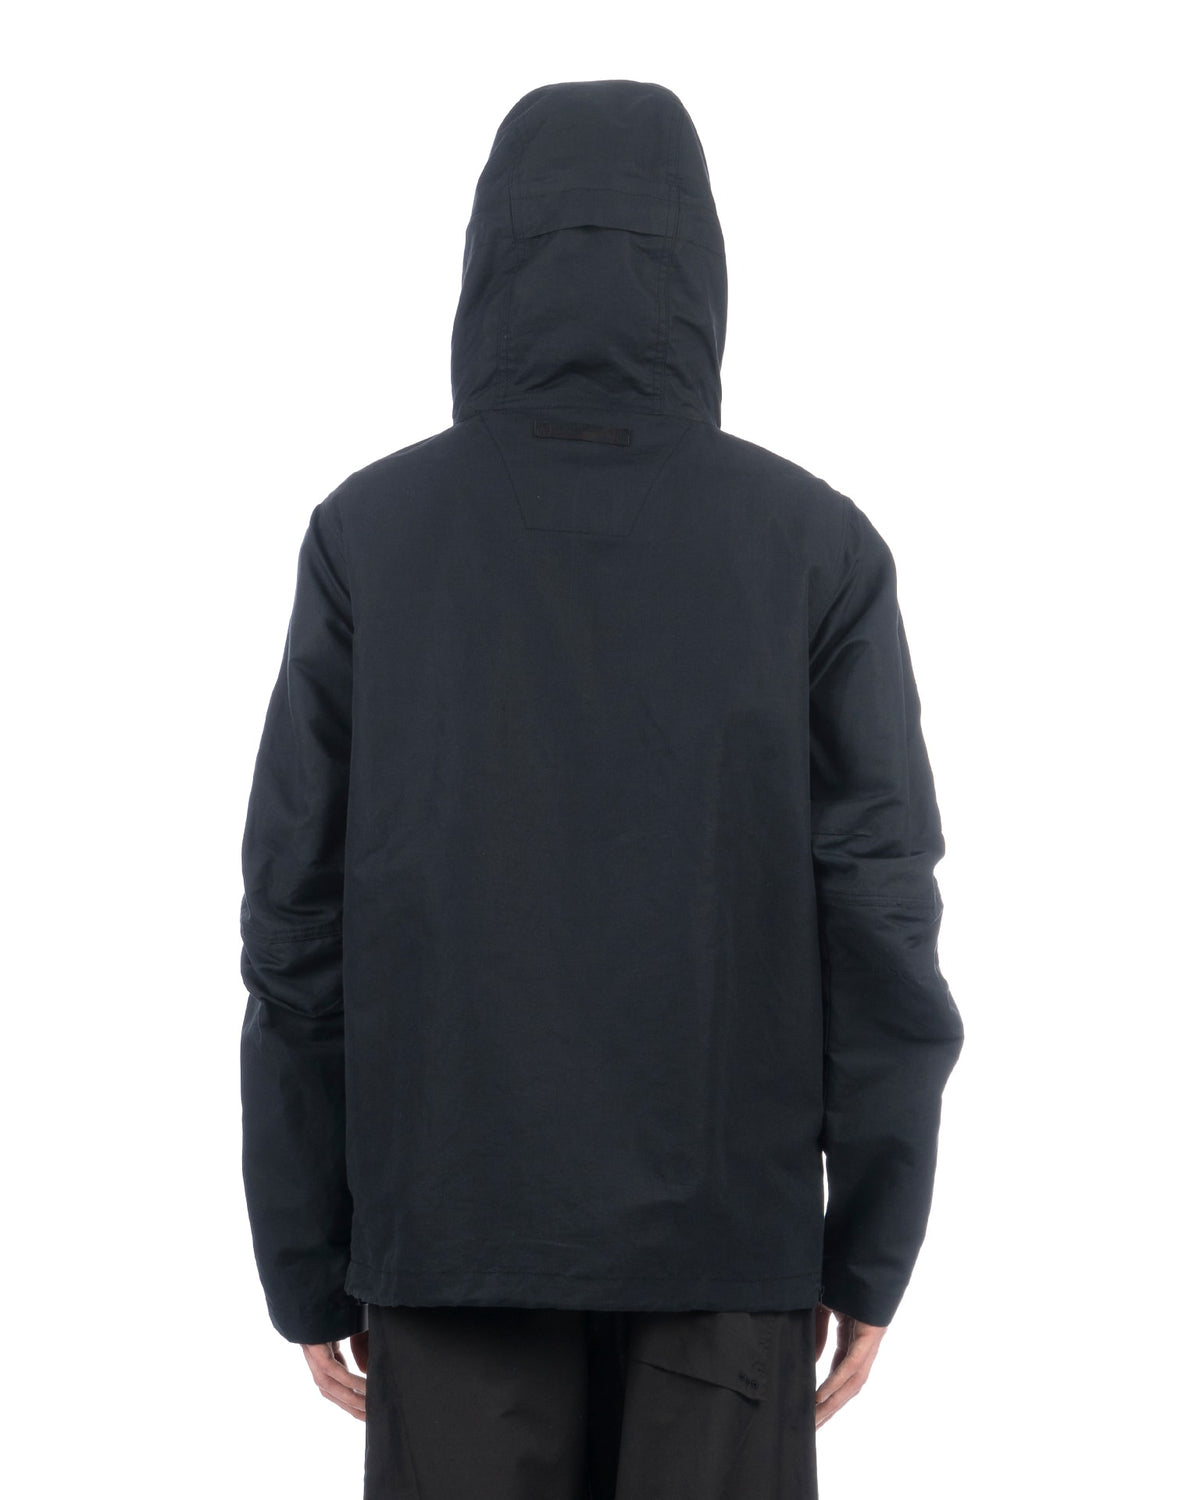 maharishi | 4200 Ventile Half-Zip Jacket Black - Concrete